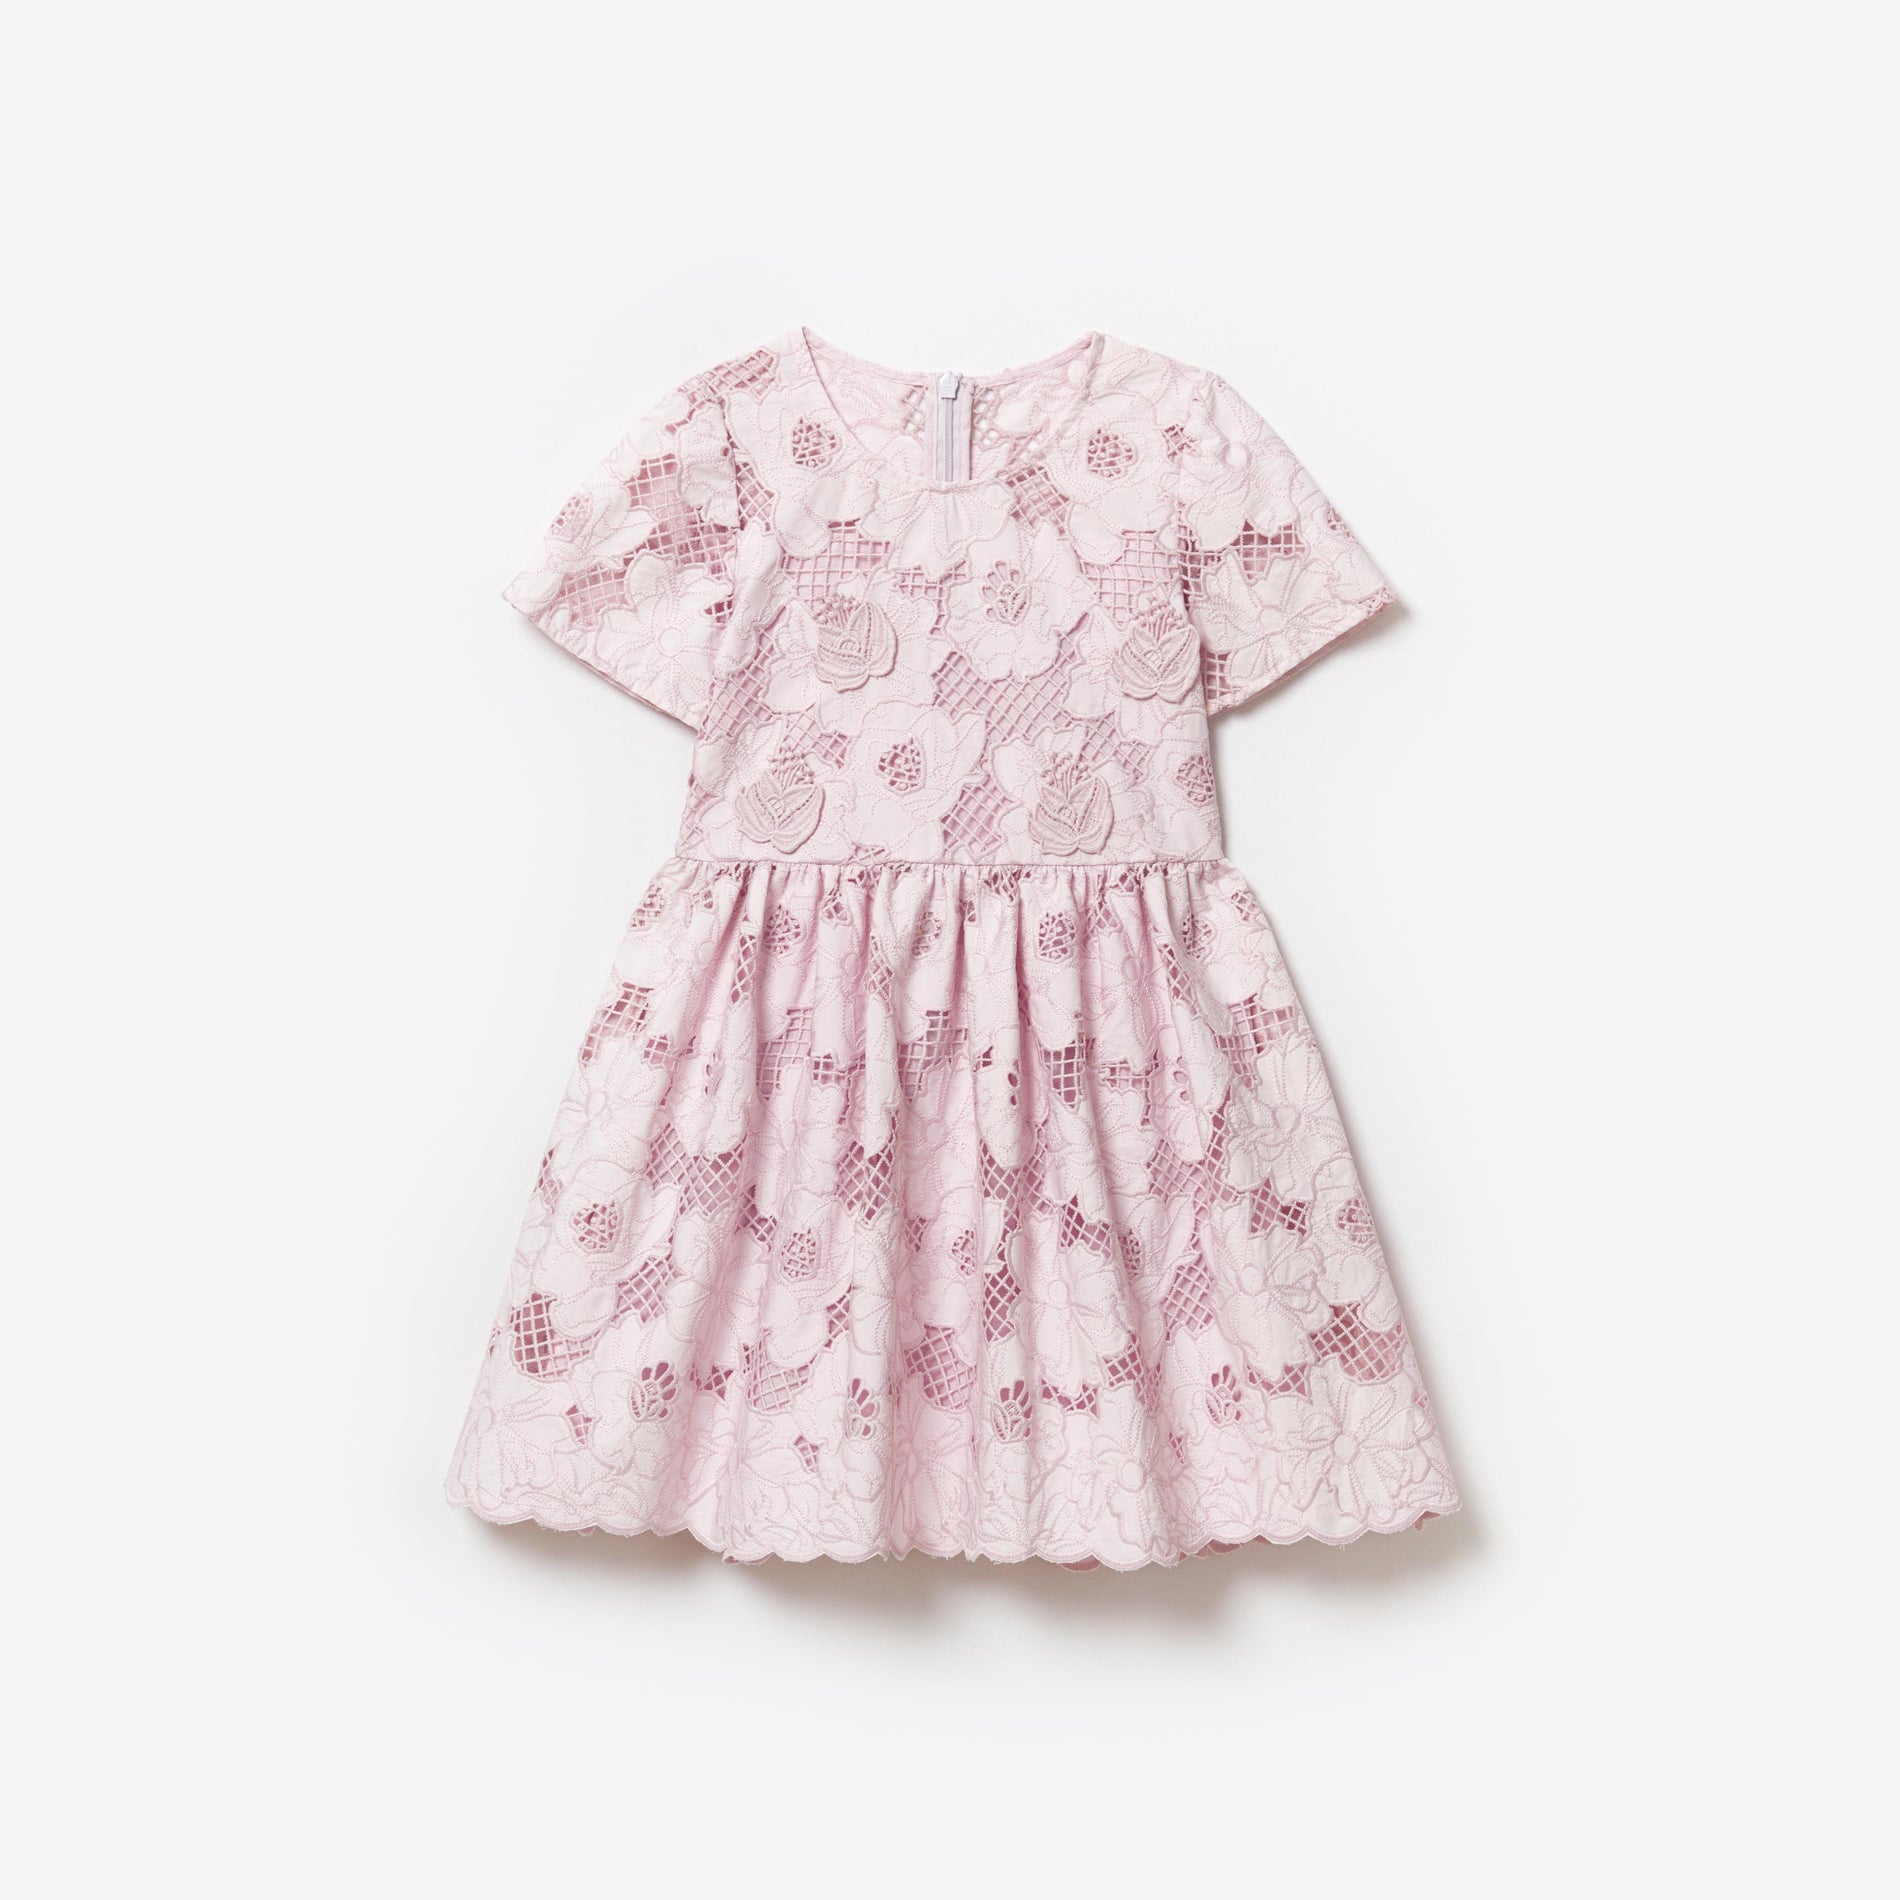 Lilac Lace Mini Dress